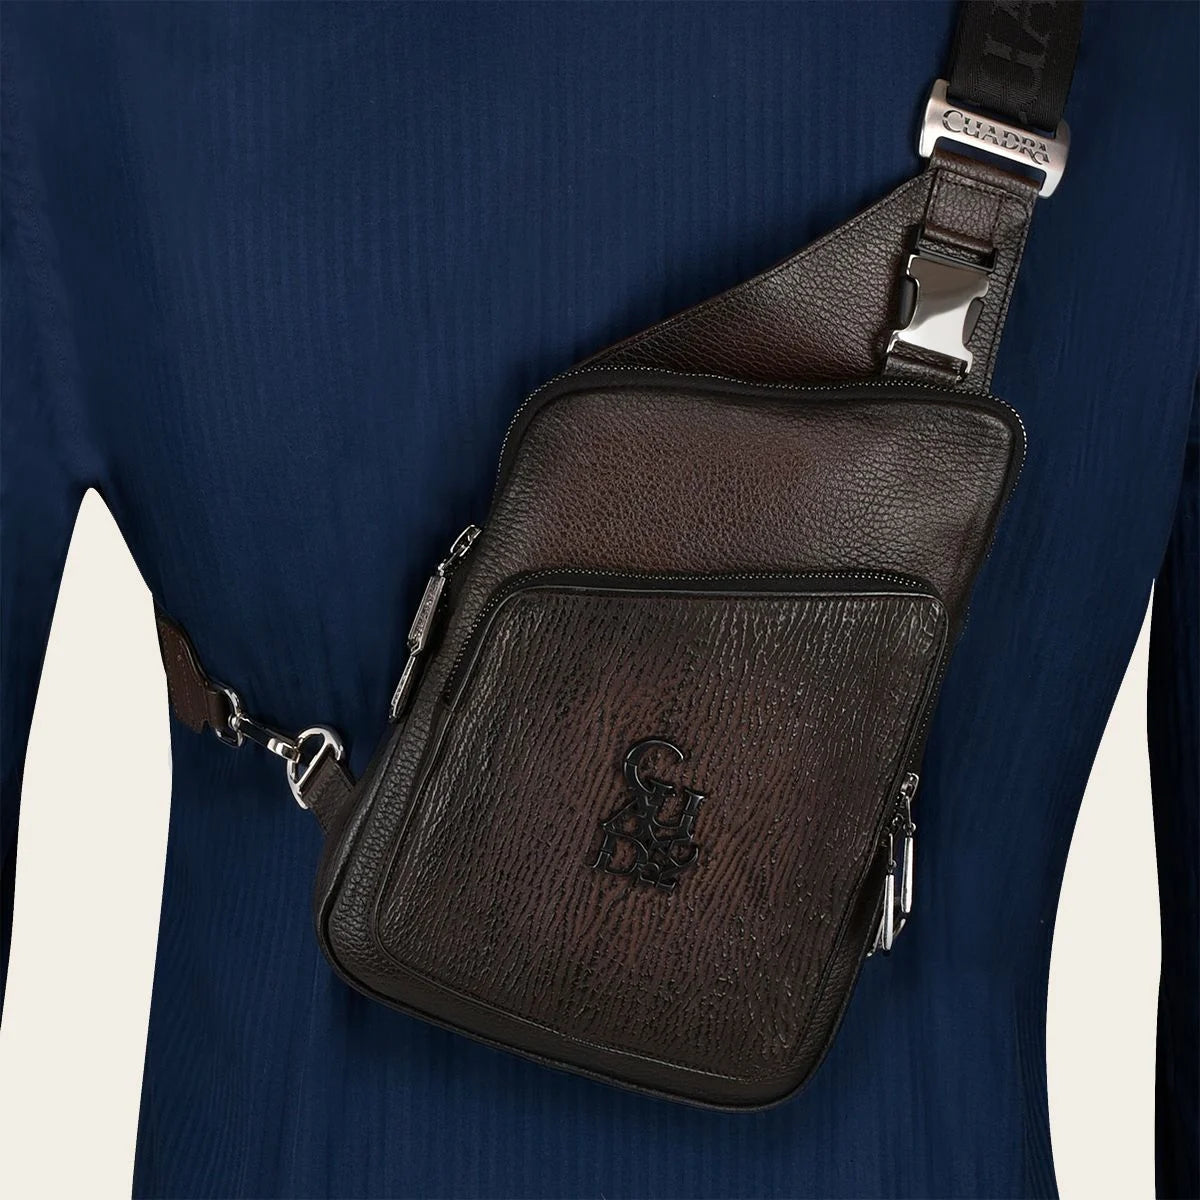 Mens Brown exotic leather shoulder bag - BOC15TI - Cuadra Shop